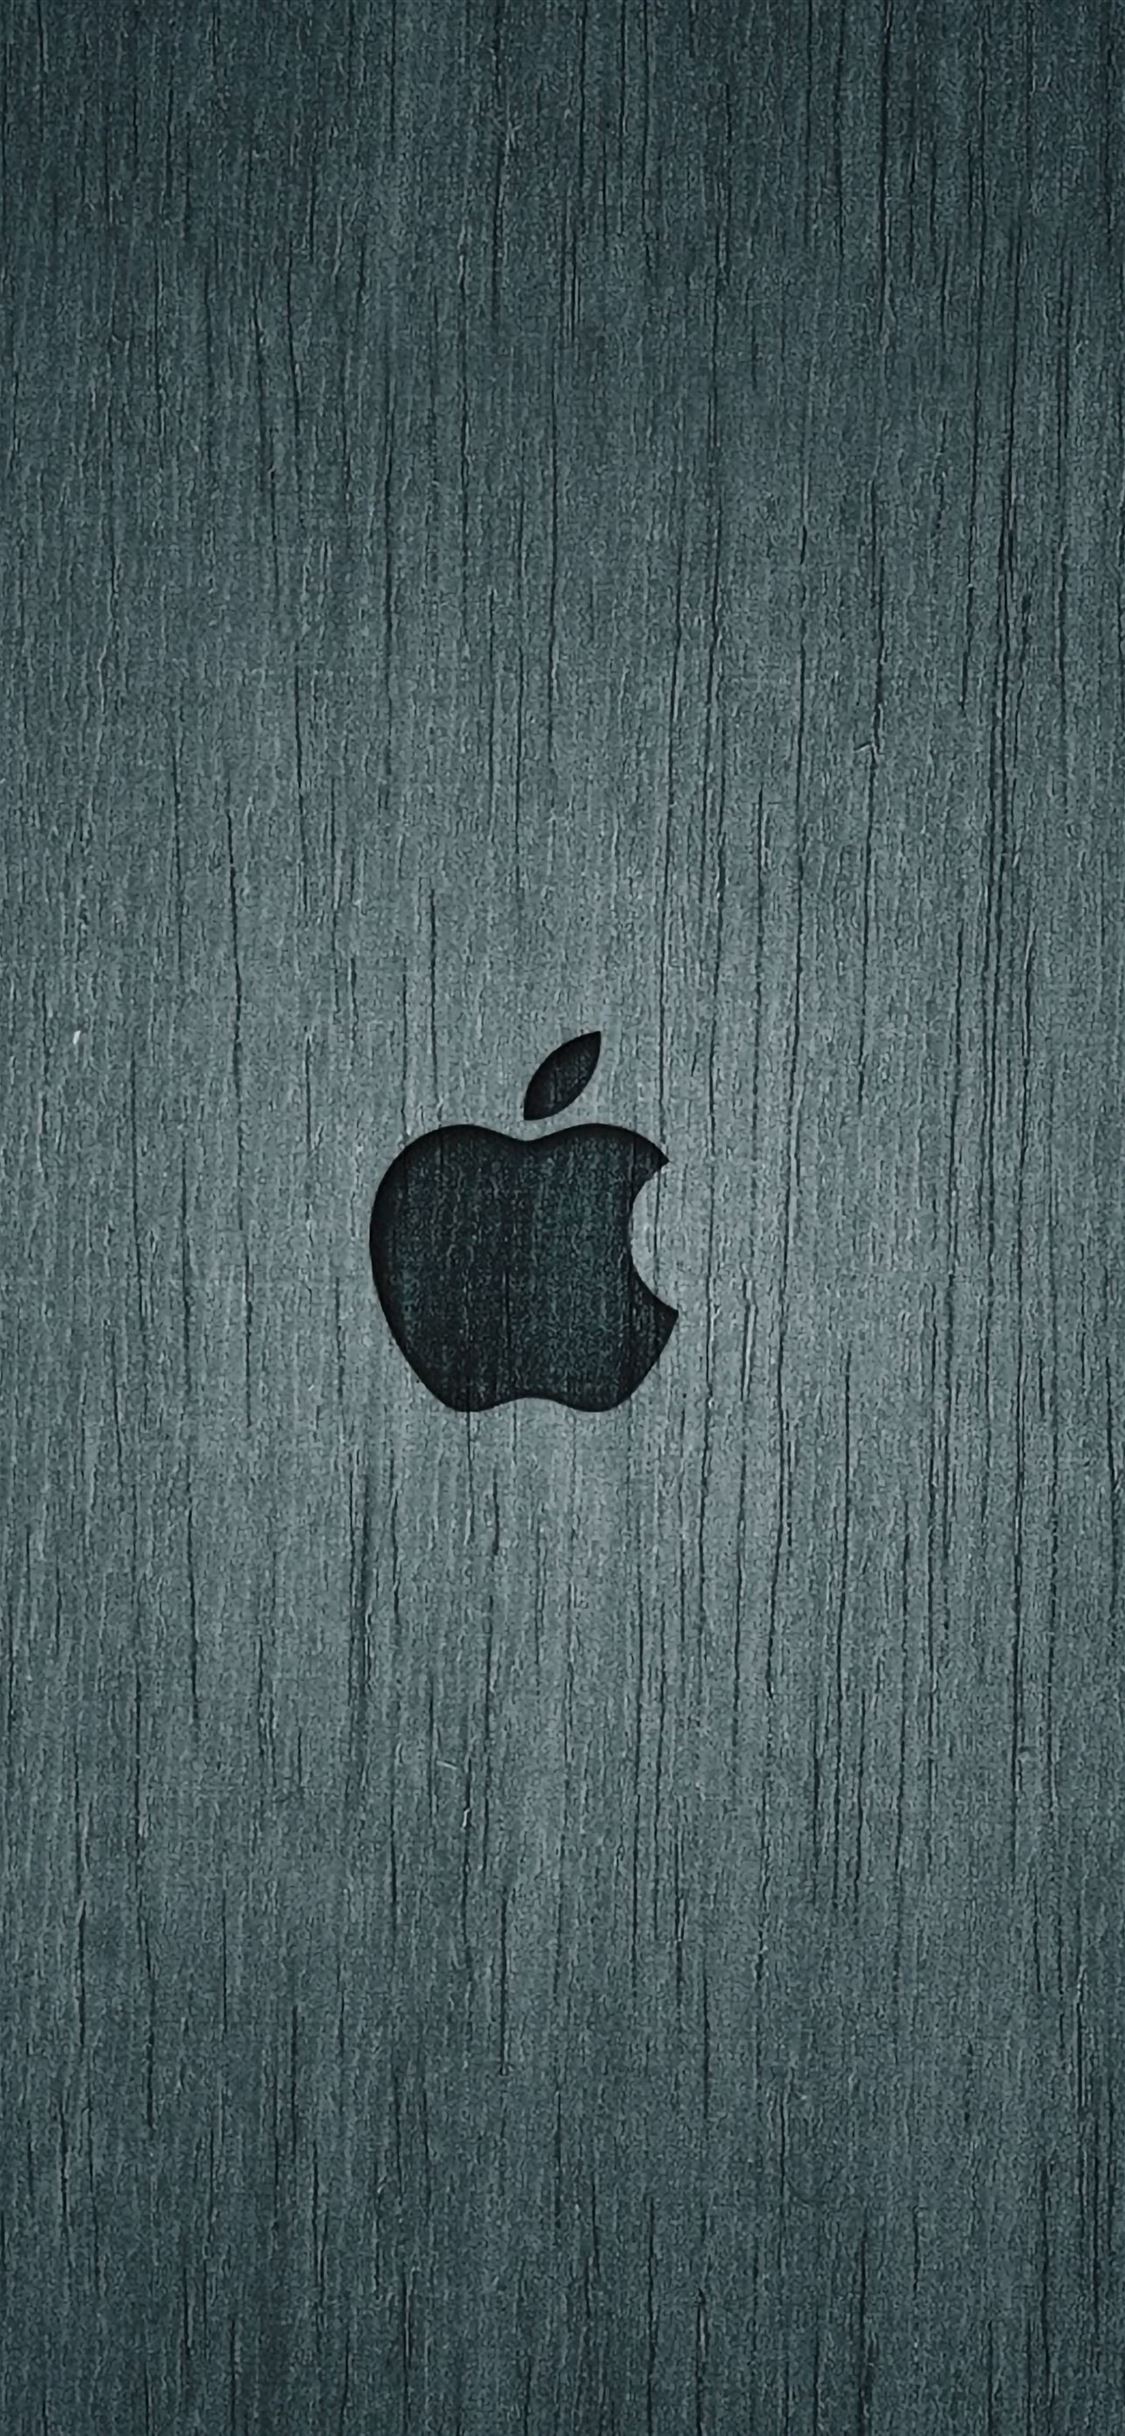 Dark Apple Wood iPhone wallpaper 